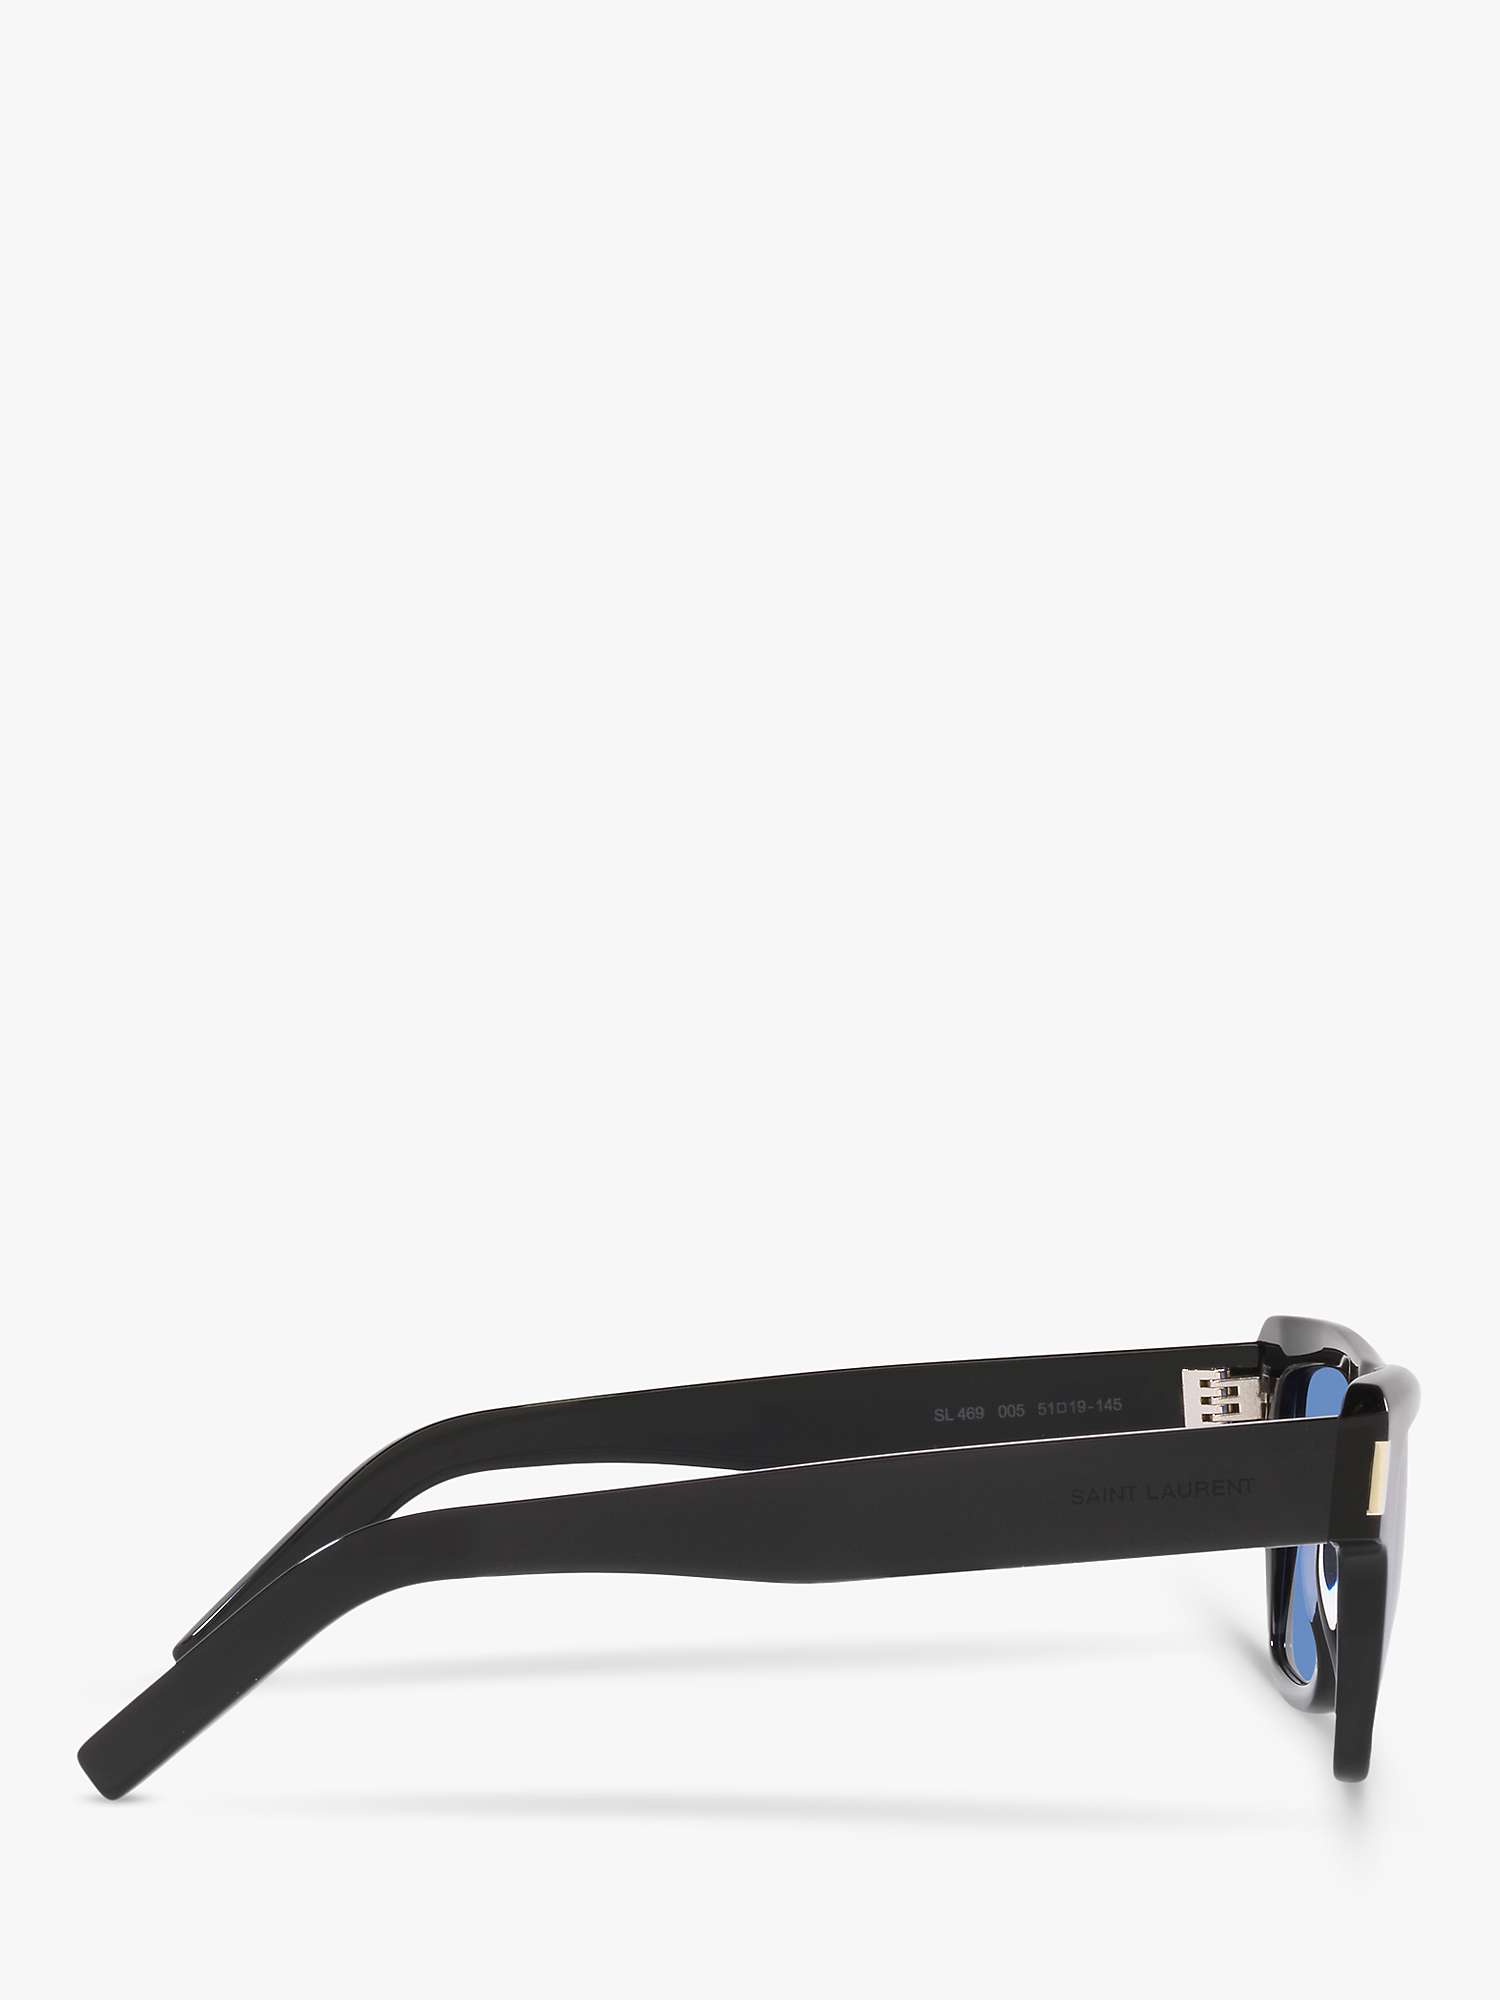 Buy Yves Saint Laurent SL 469 Unisex Rectangular Sunglasses, Shiny Black/Blue Online at johnlewis.com